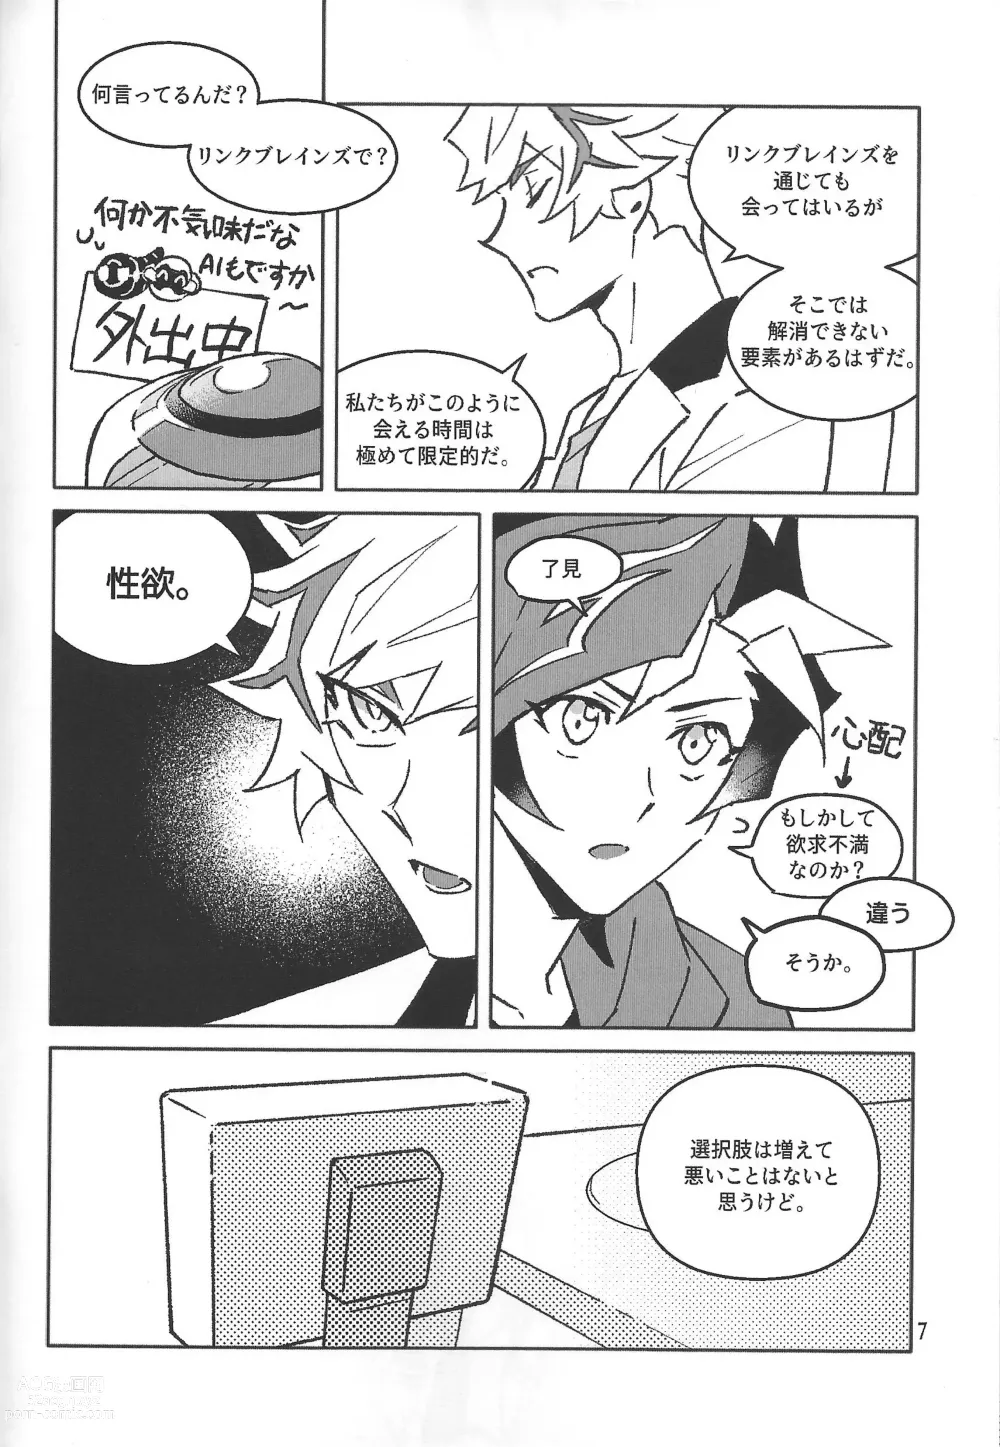 Page 8 of doujinshi TEST NO.3